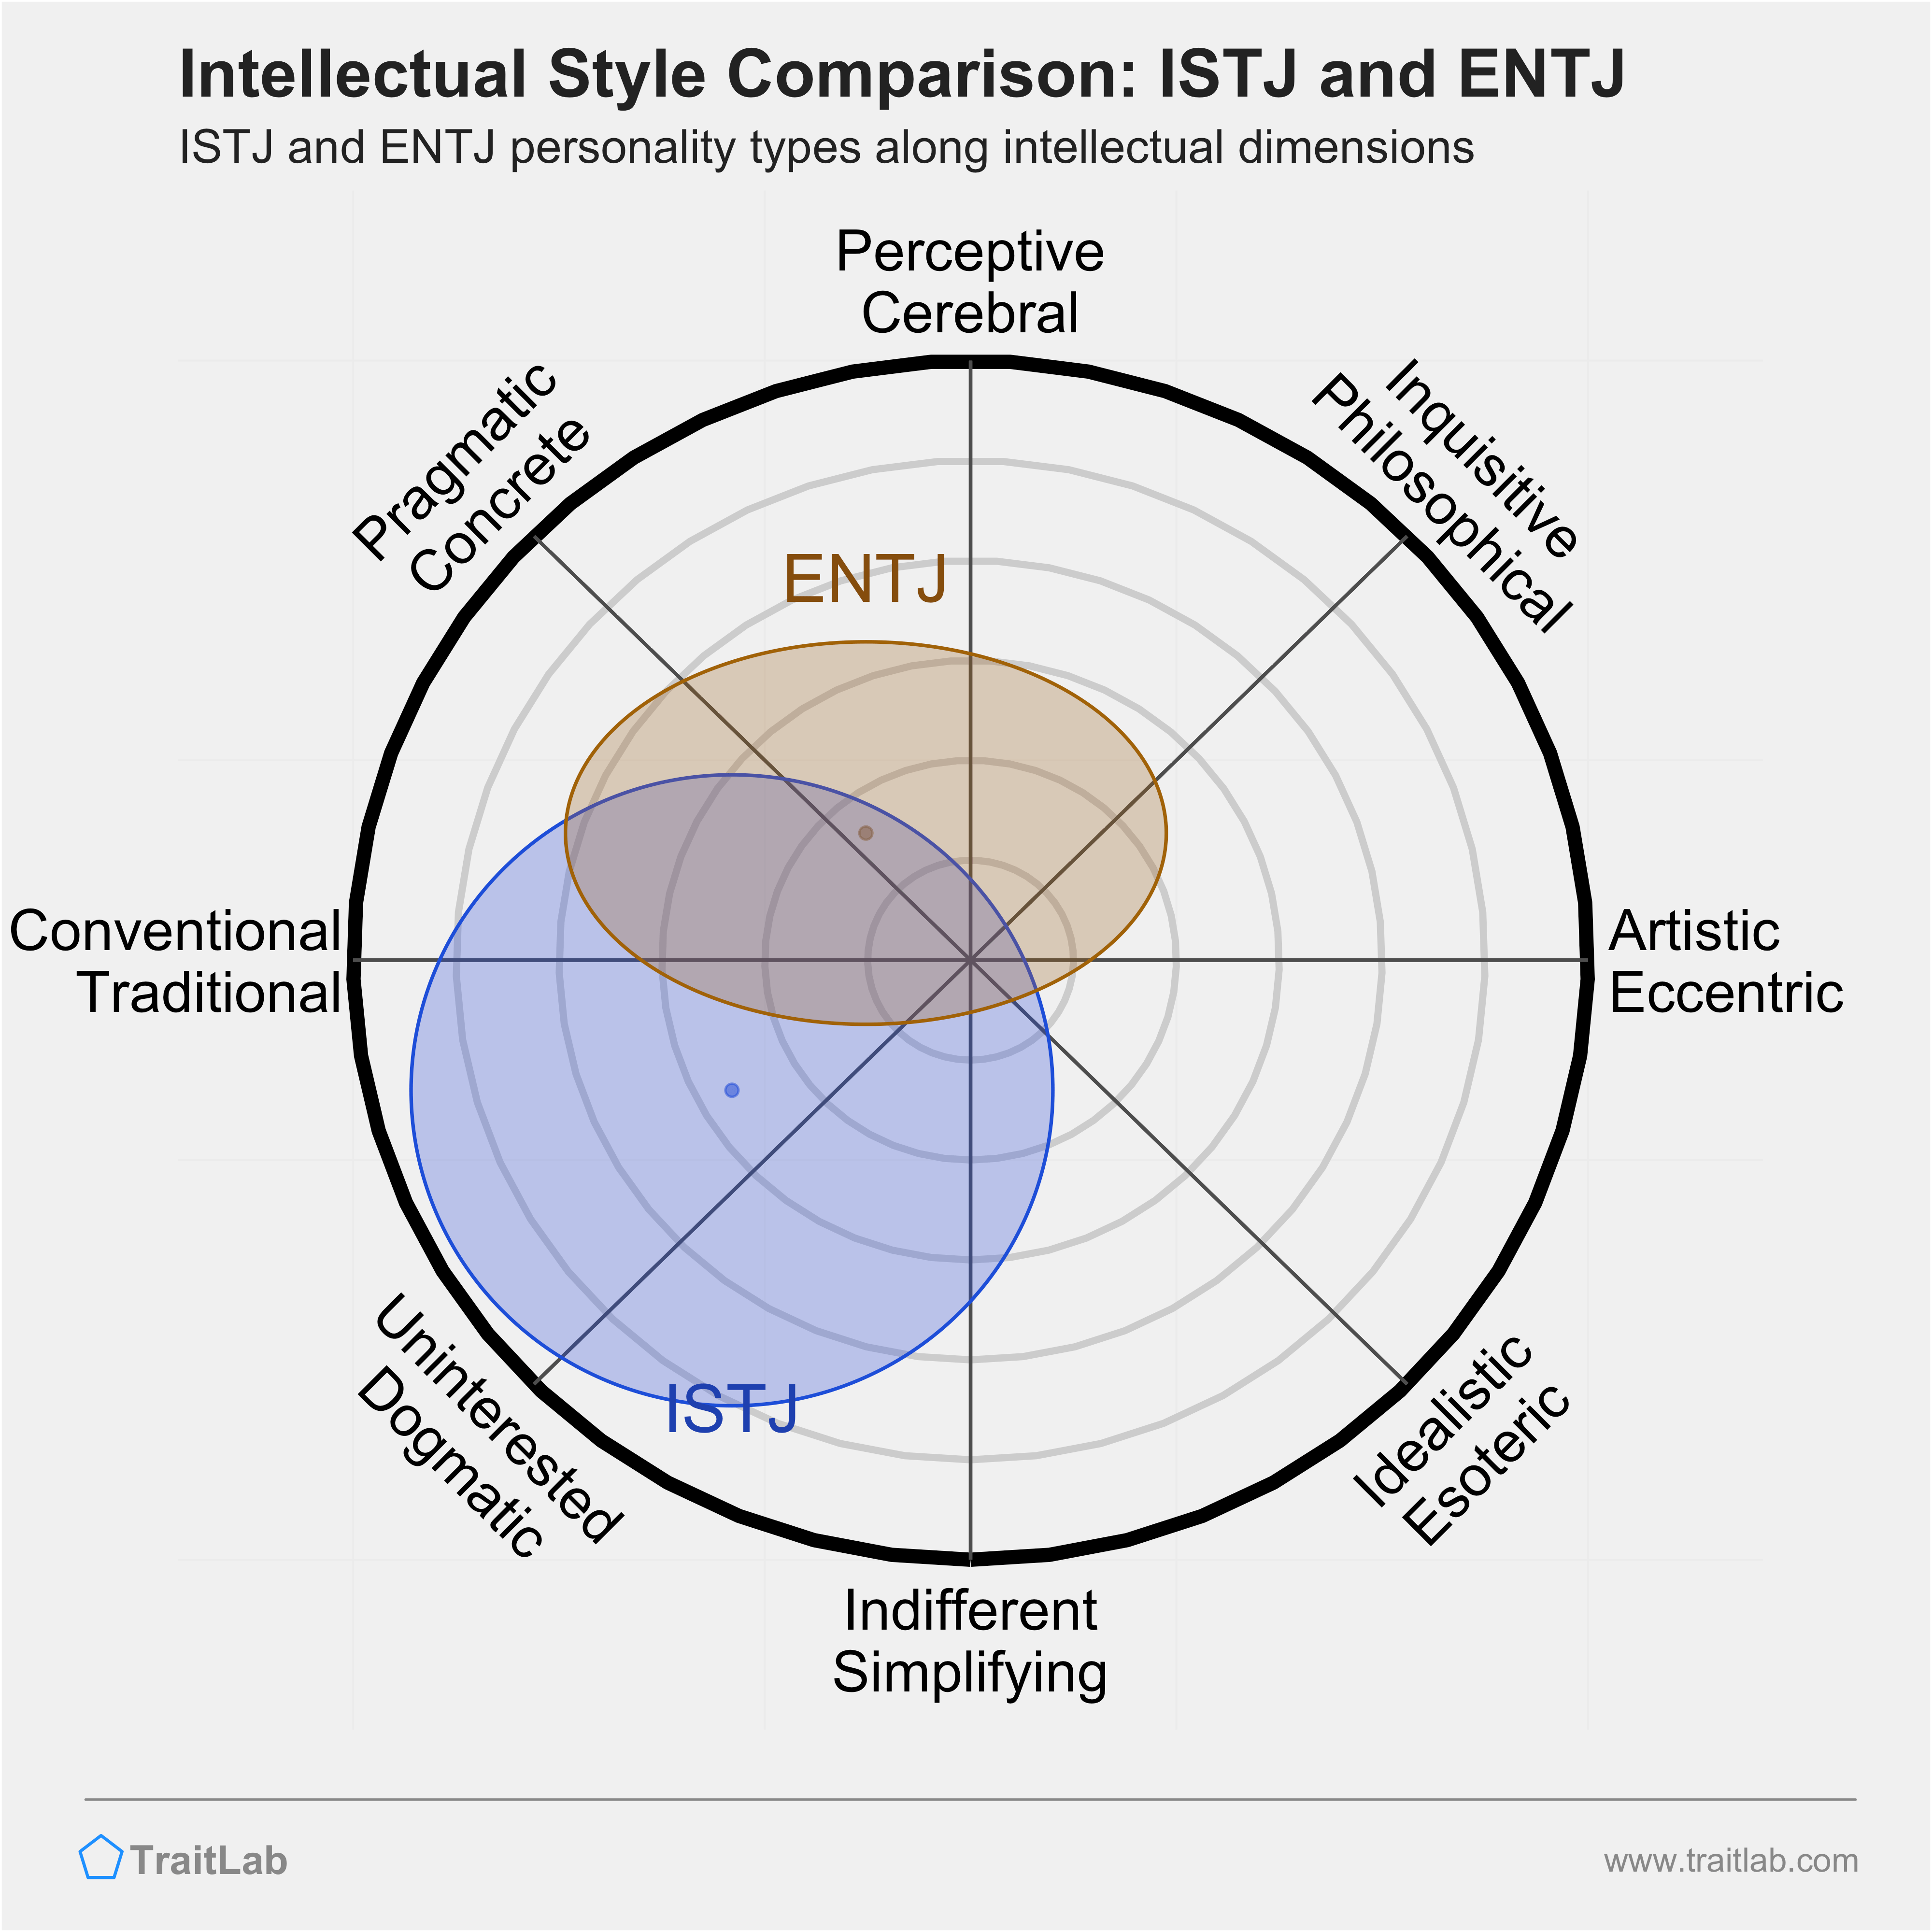 ISTJ and ENTJ comparison across intellectual dimensions